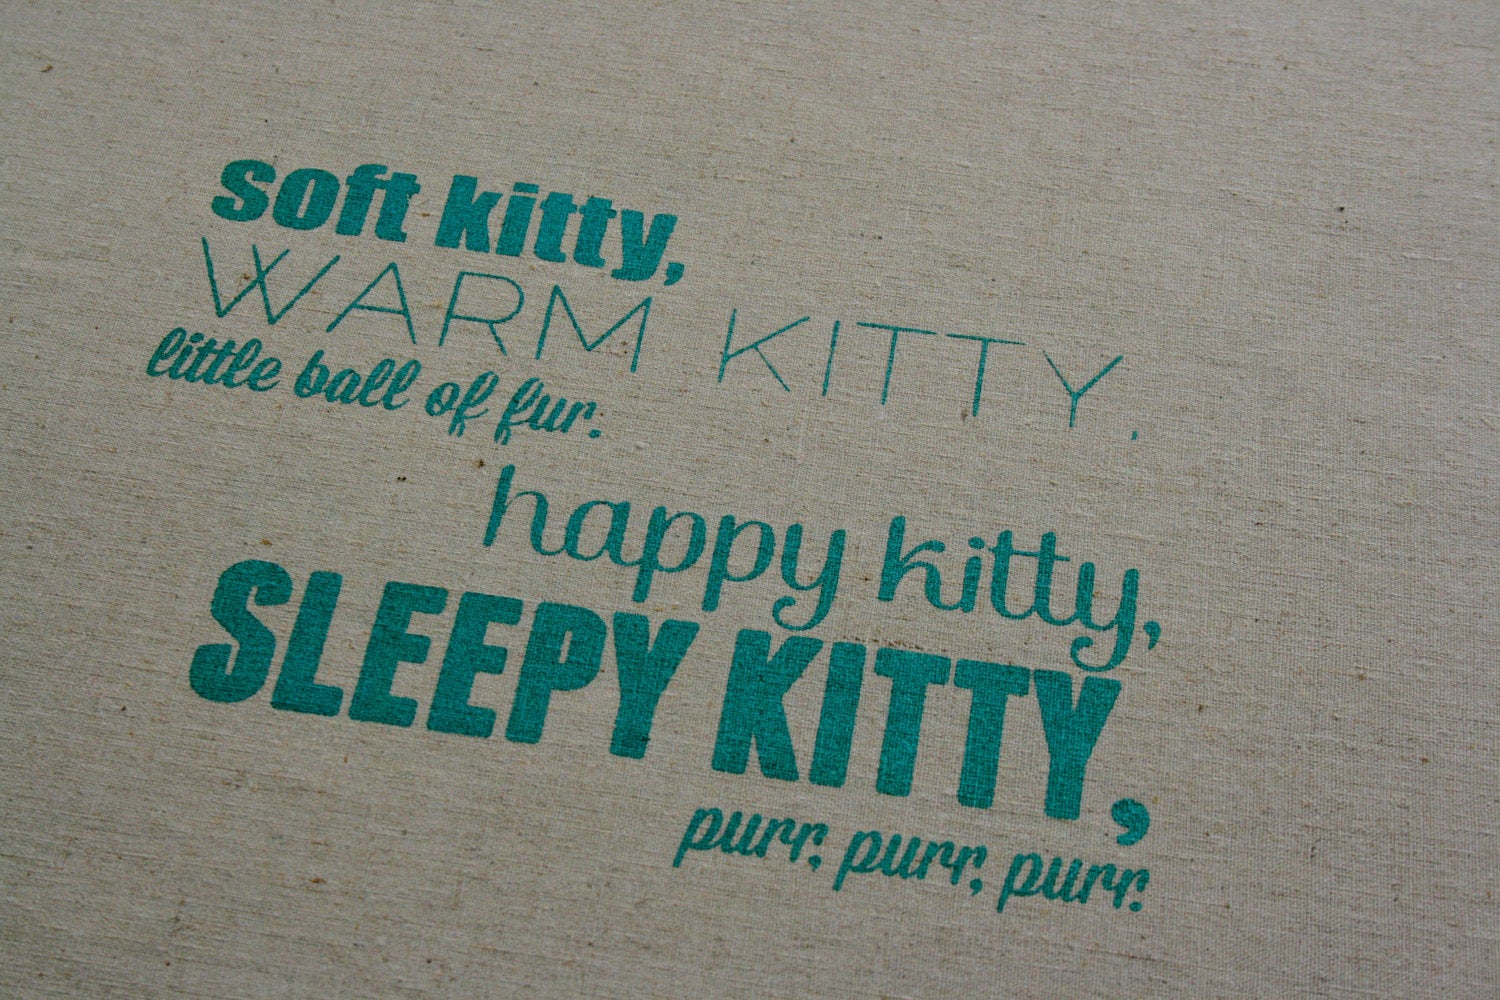 soft kitty warm kitty lyrics german